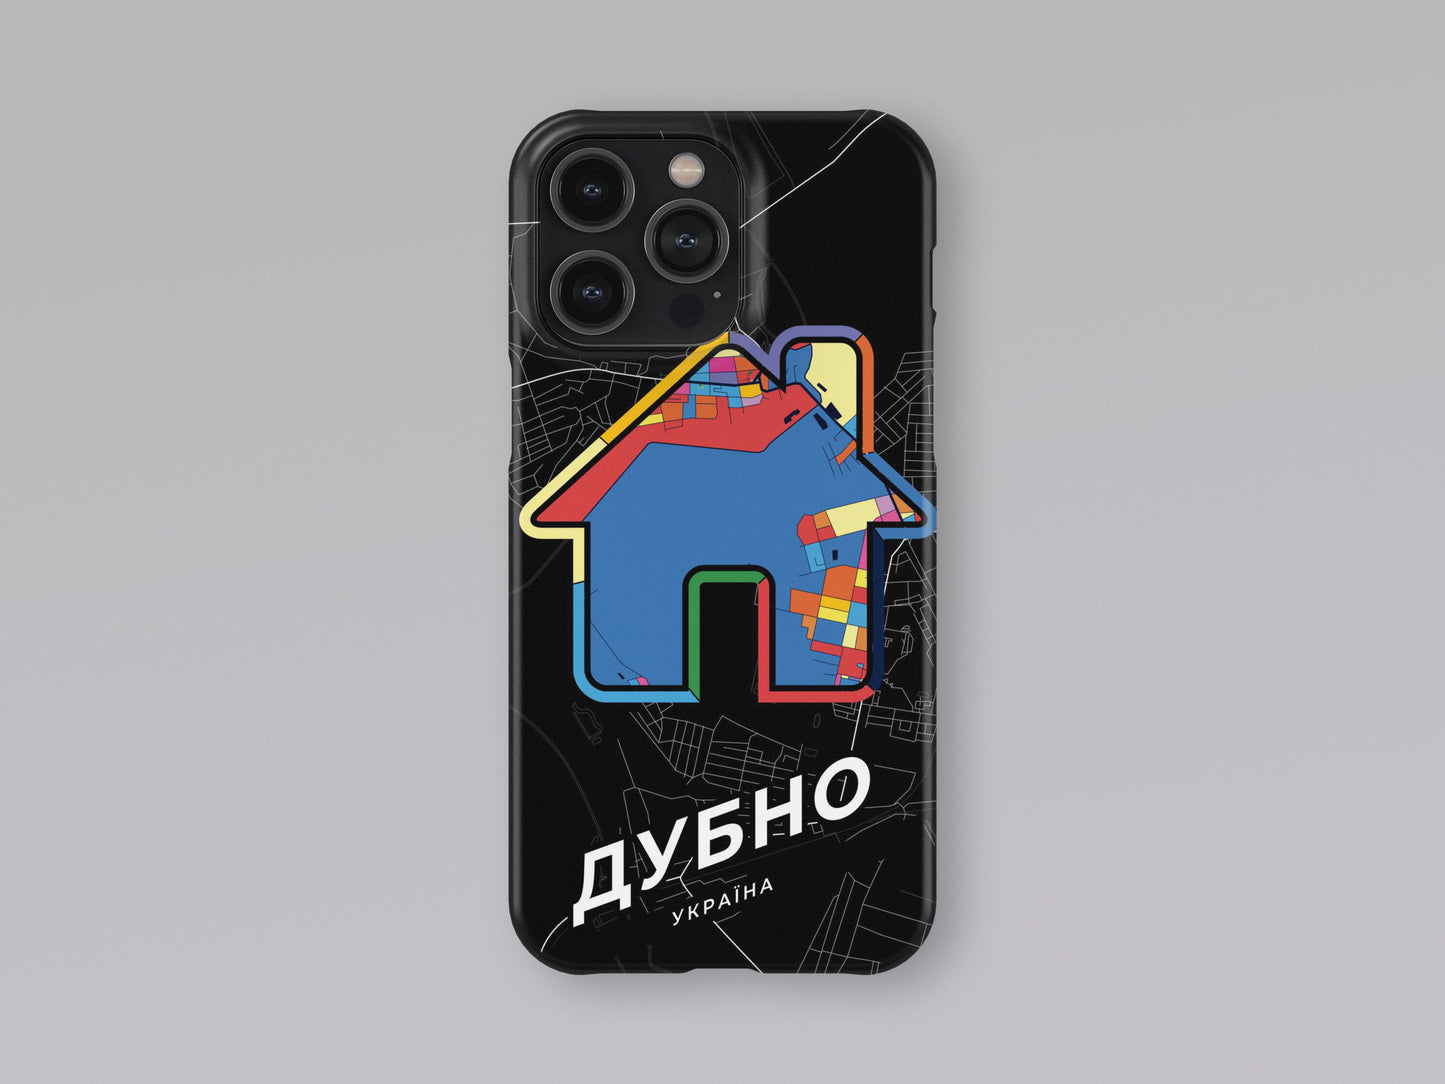 Dubno Ukraine slim phone case with colorful icon. Birthday, wedding or housewarming gift. Couple match cases. 3